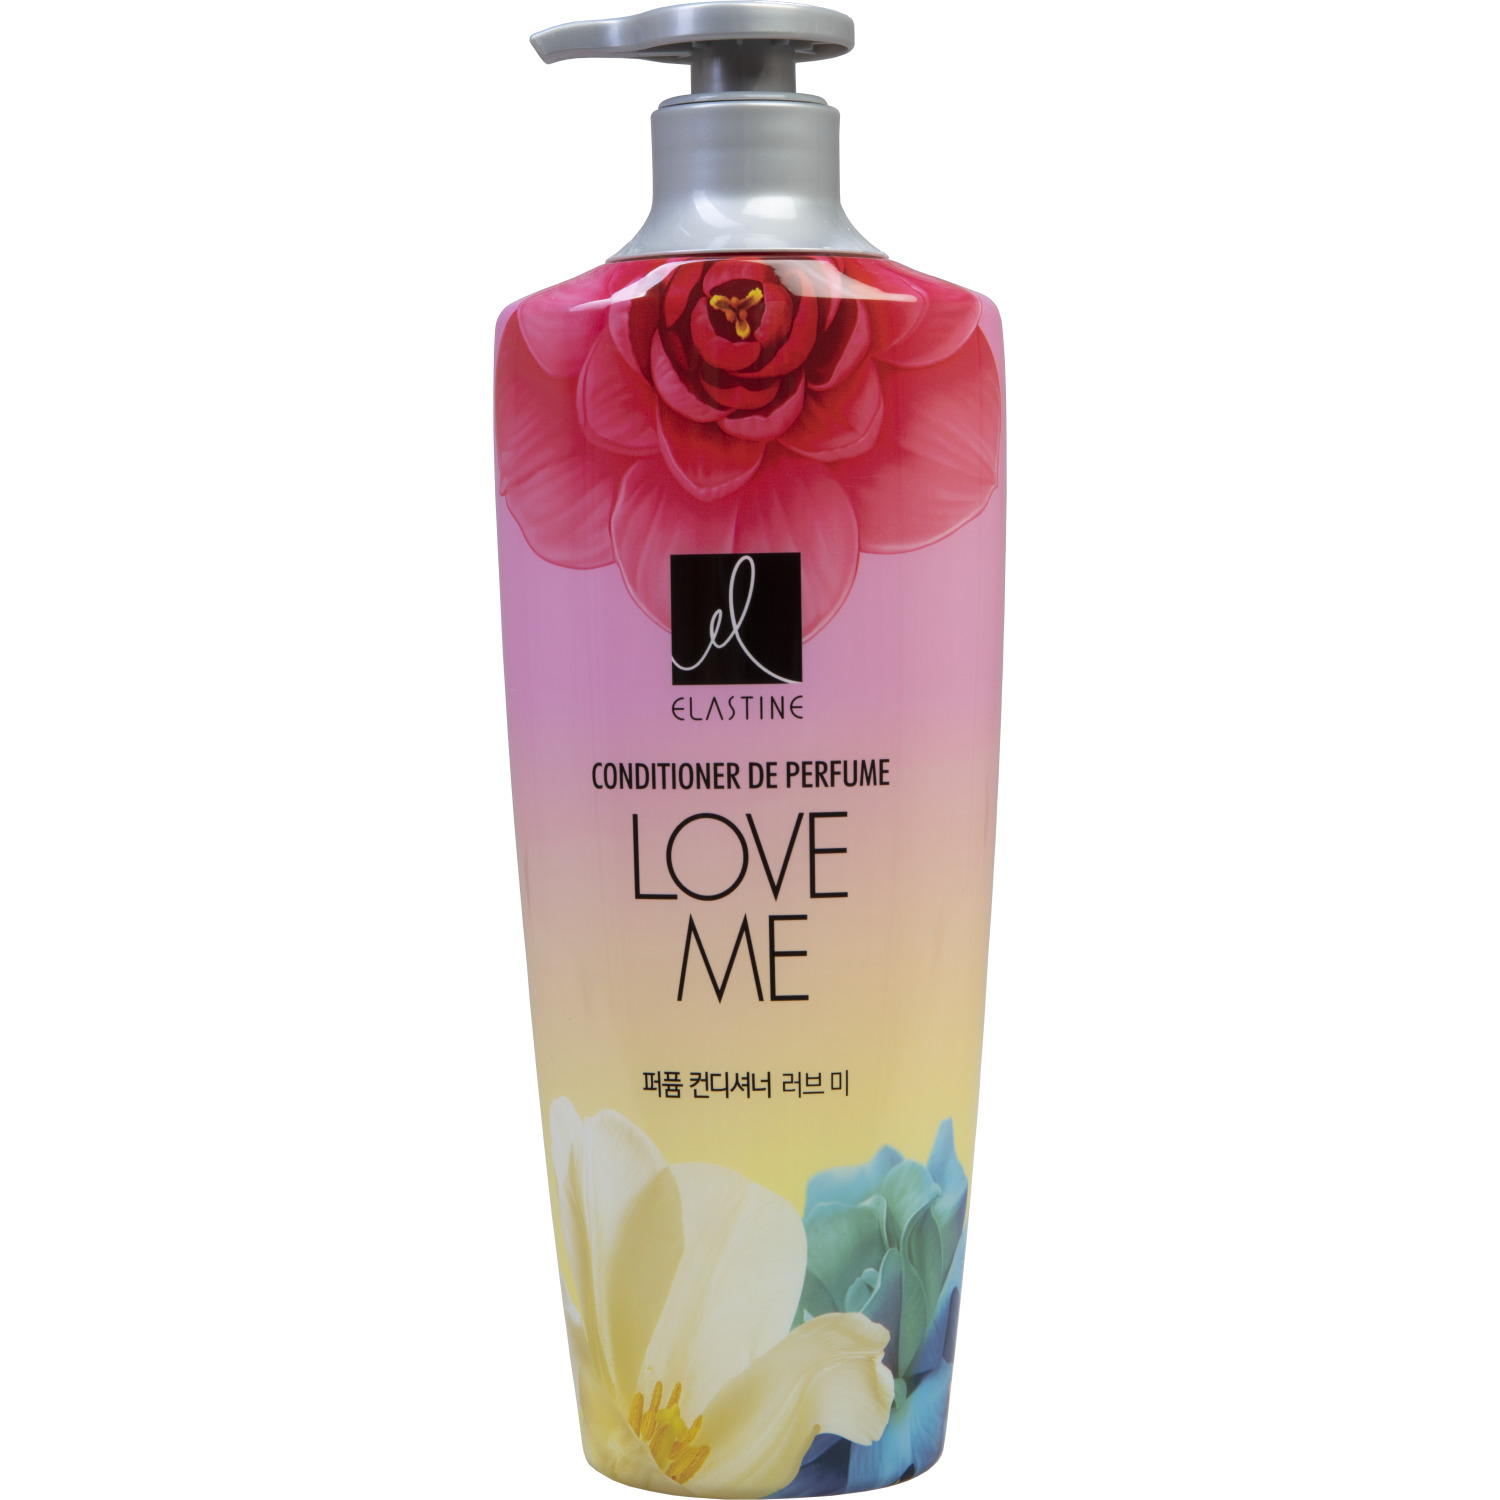 Кондиционер Elastine Perfume Love me парфюмированный 600 мл кондиционер для очистки воды tetra crystal water 250мл